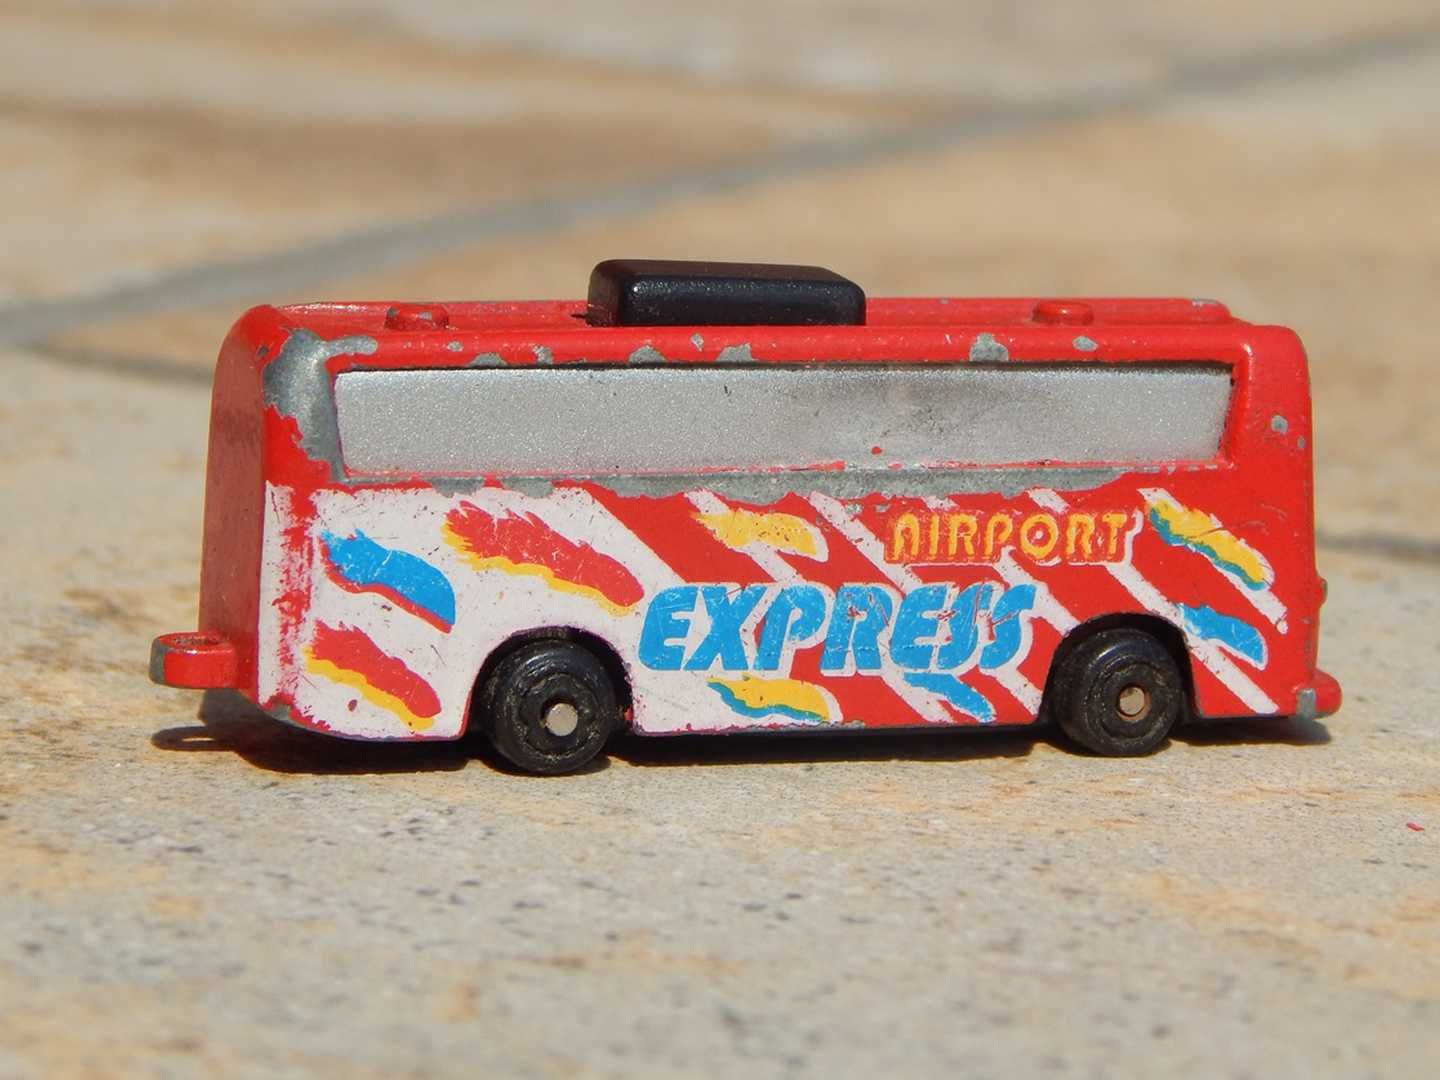 Macheta veche autobuz autocar aeroport Airport Express metalica 1:120